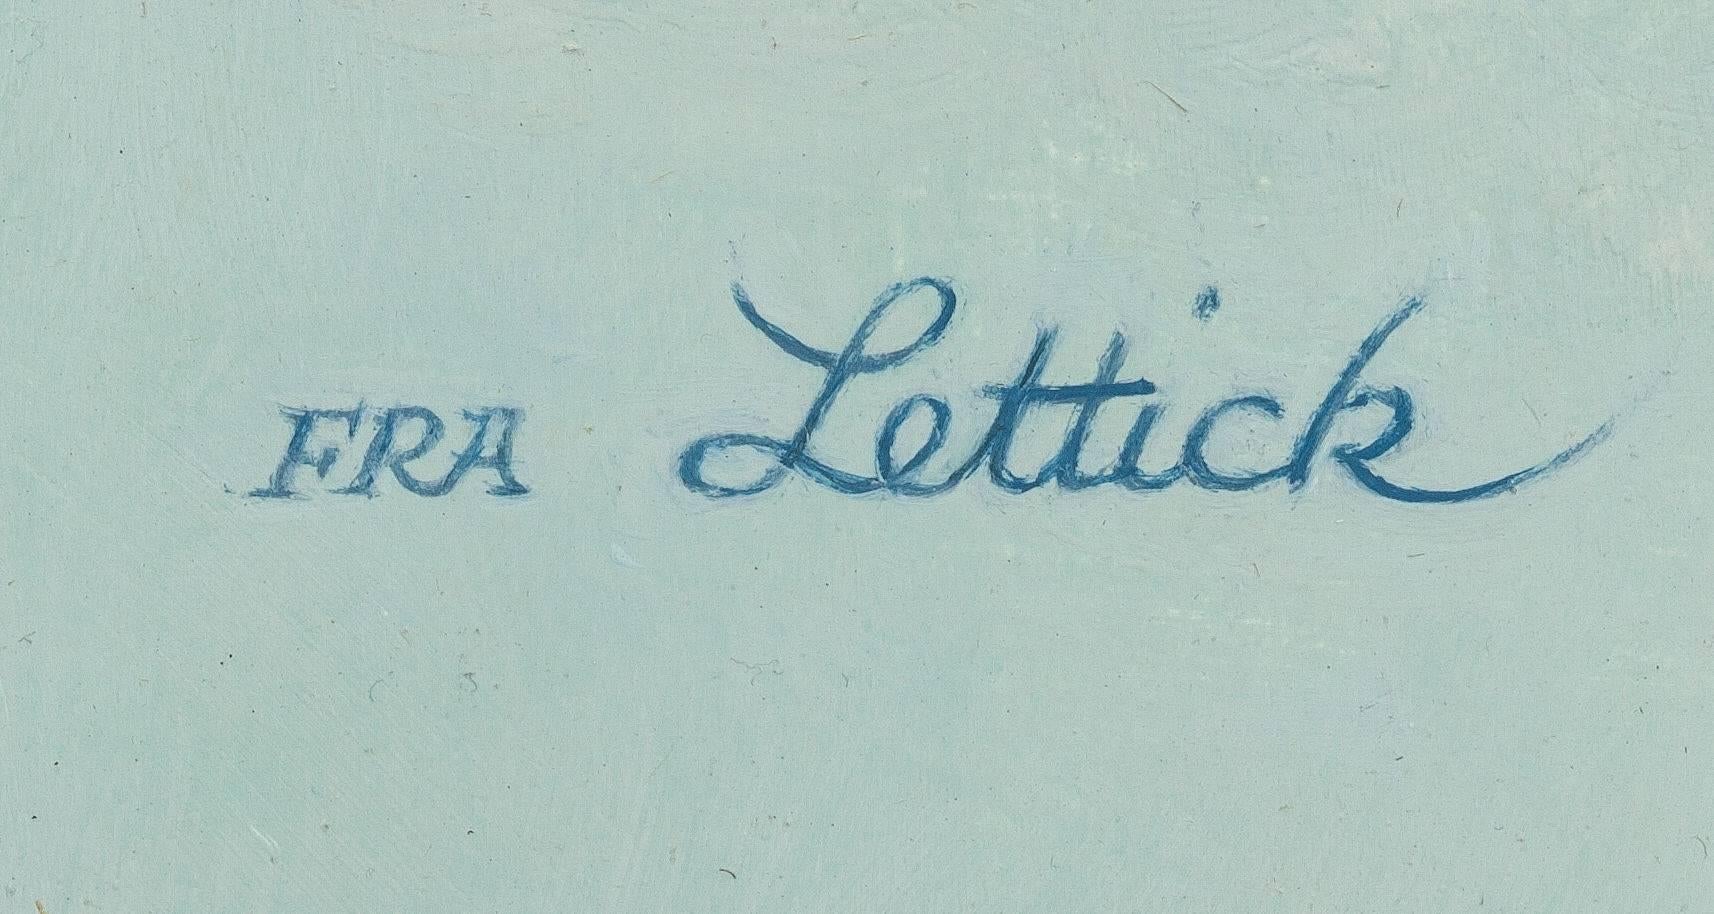 birney lettick